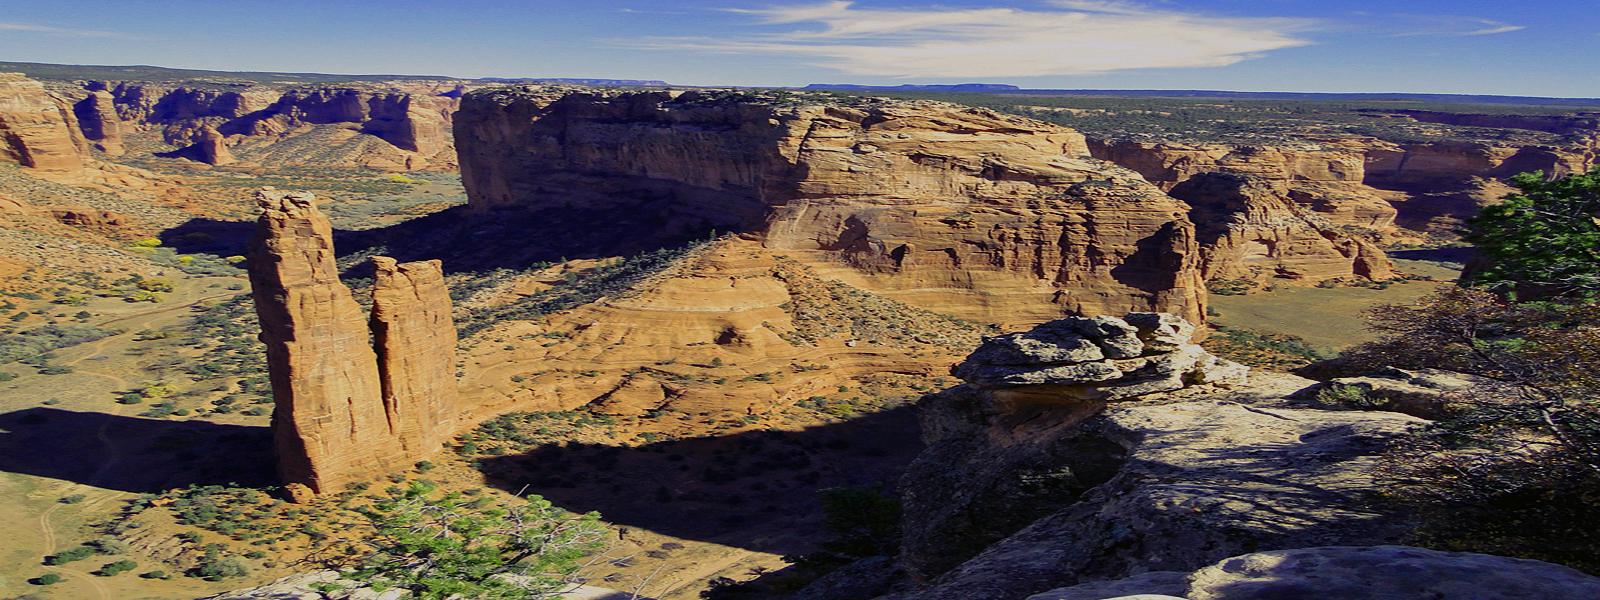 Spider Rock - Canyon de Chelly, Navajo Nation